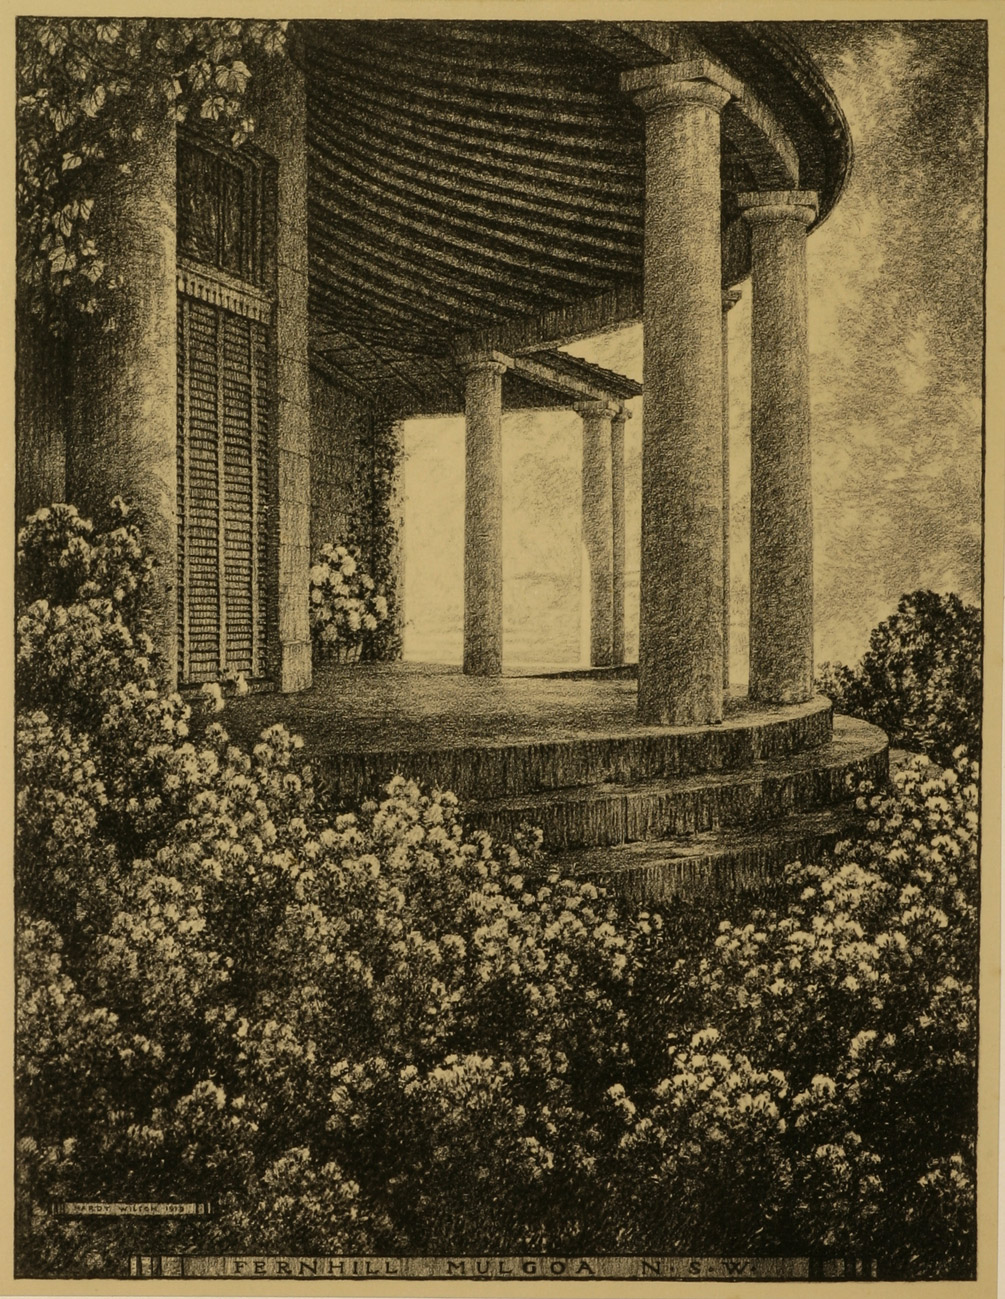 Fernhill Mulgoa N.S.W. - Vintage Print from 1924